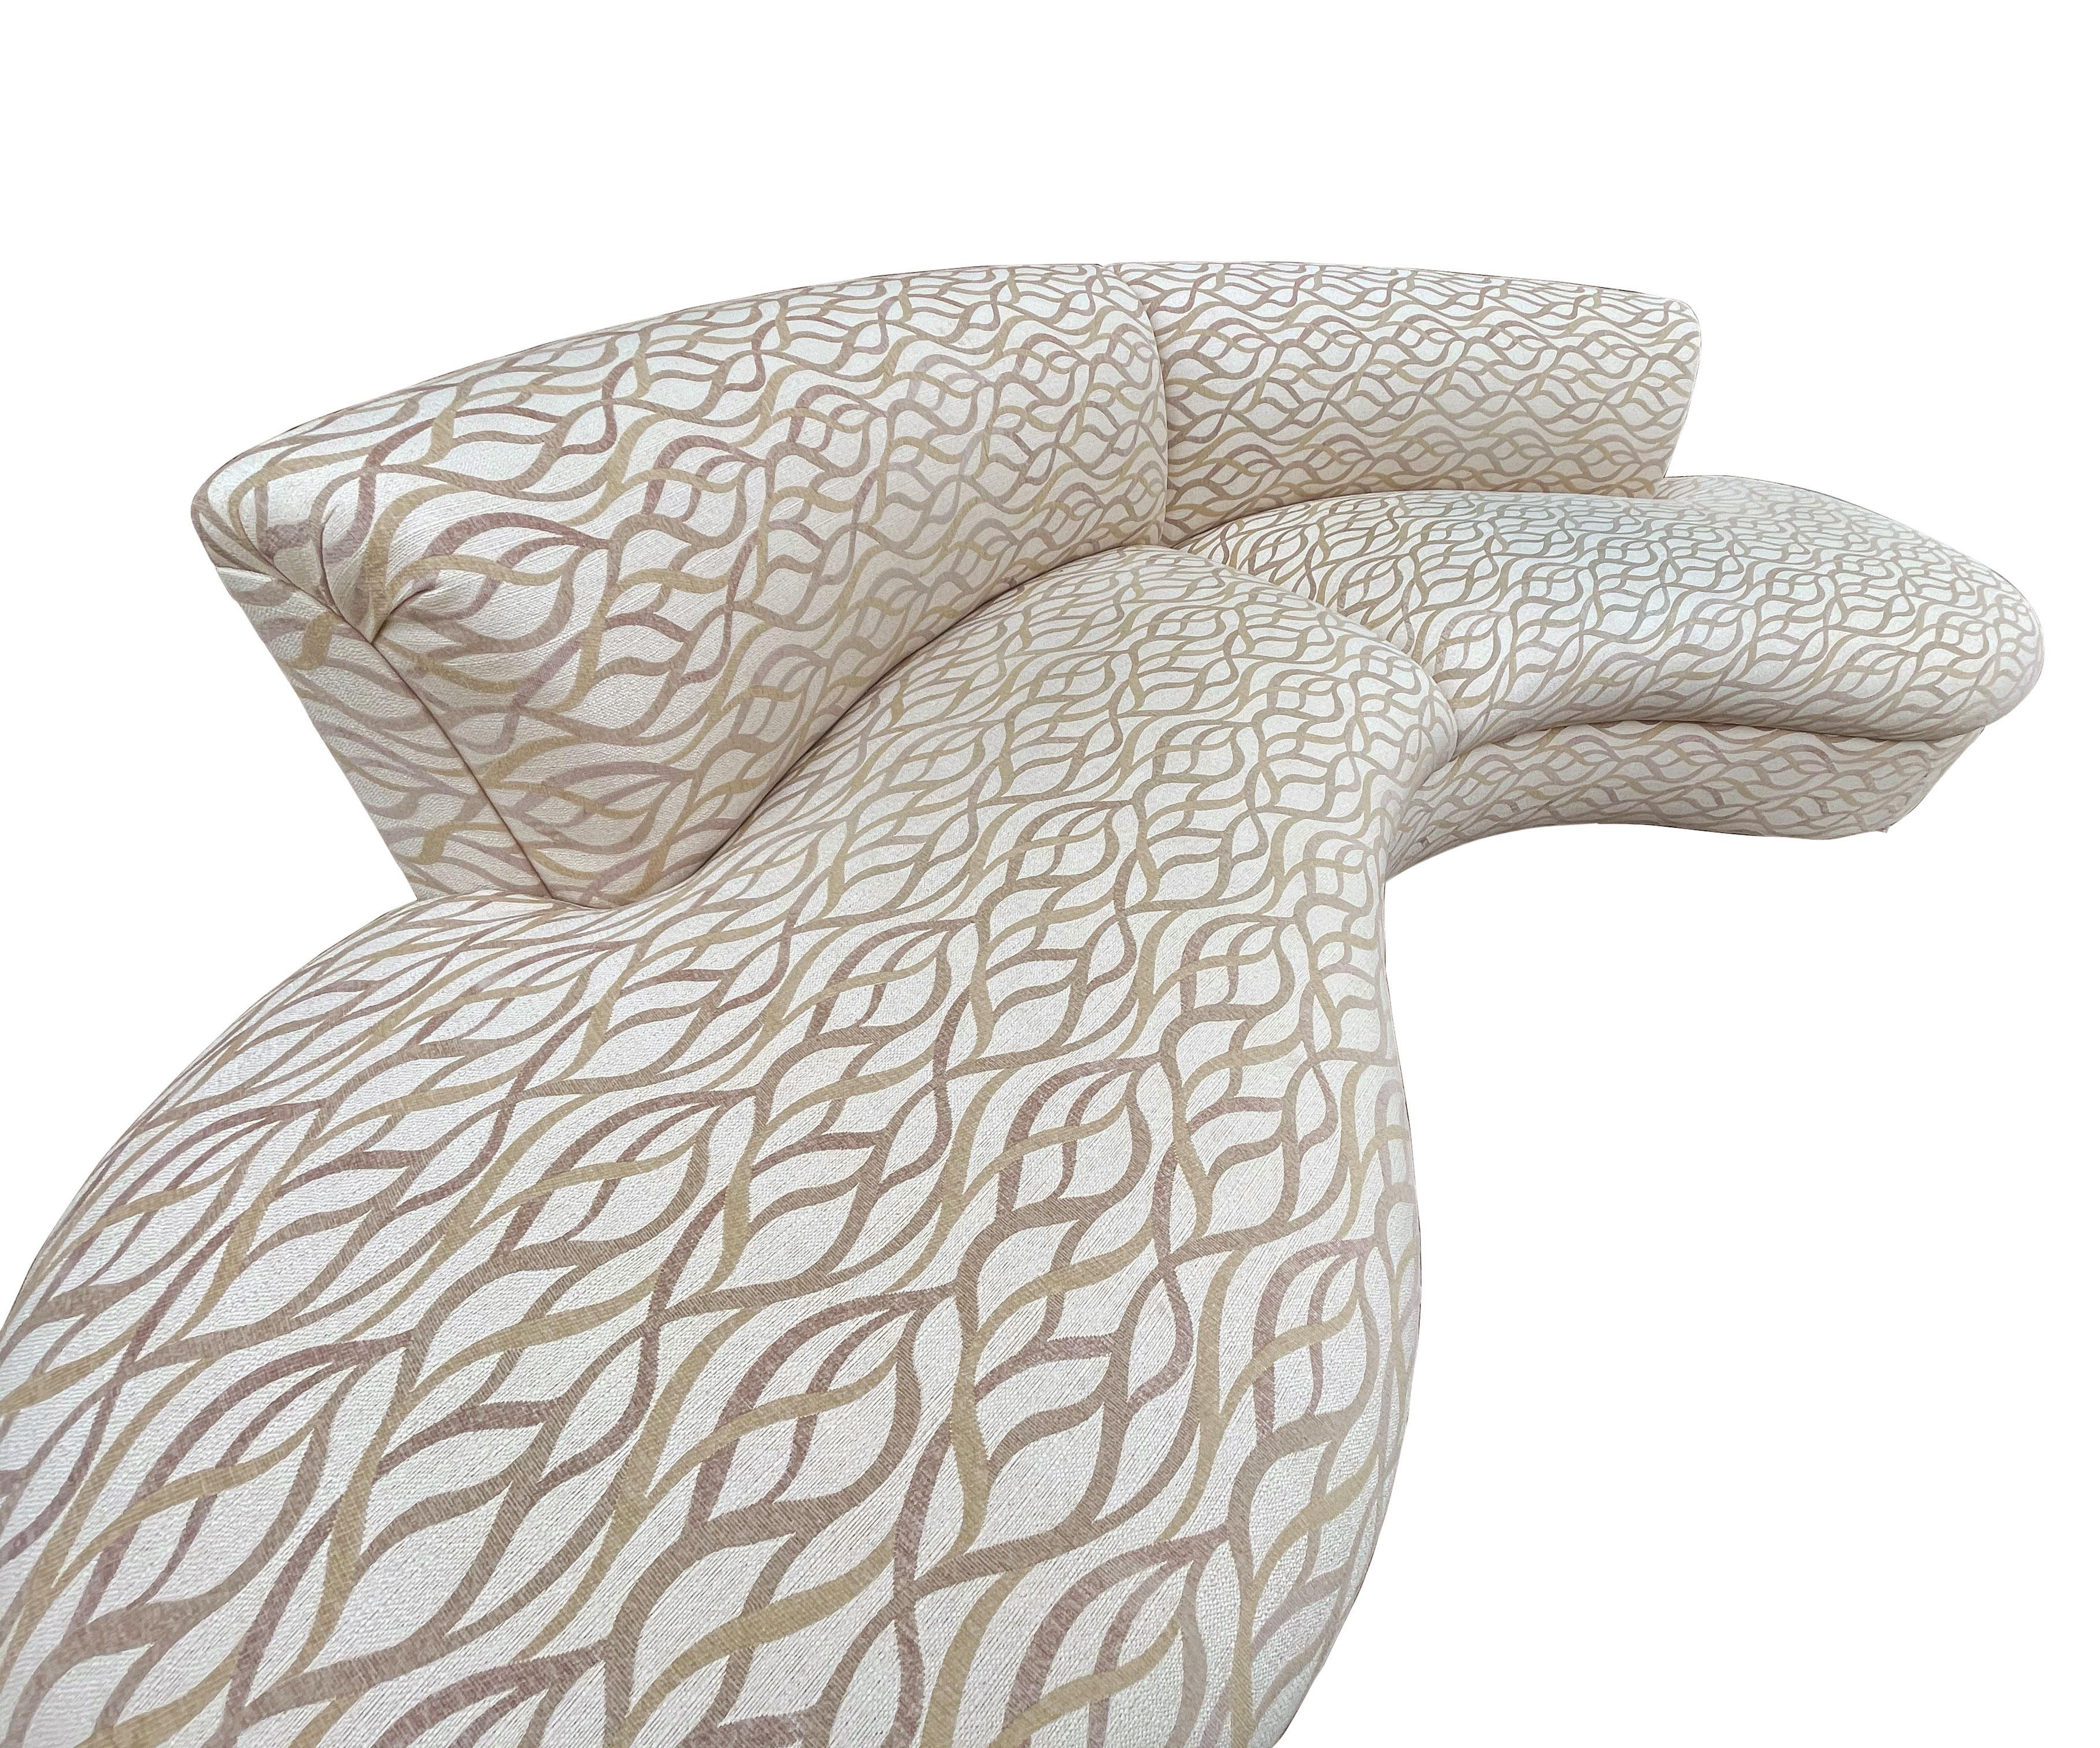 American Mid-Century Modern Curved Kidney Shape Sofa in Creme Print Fabric